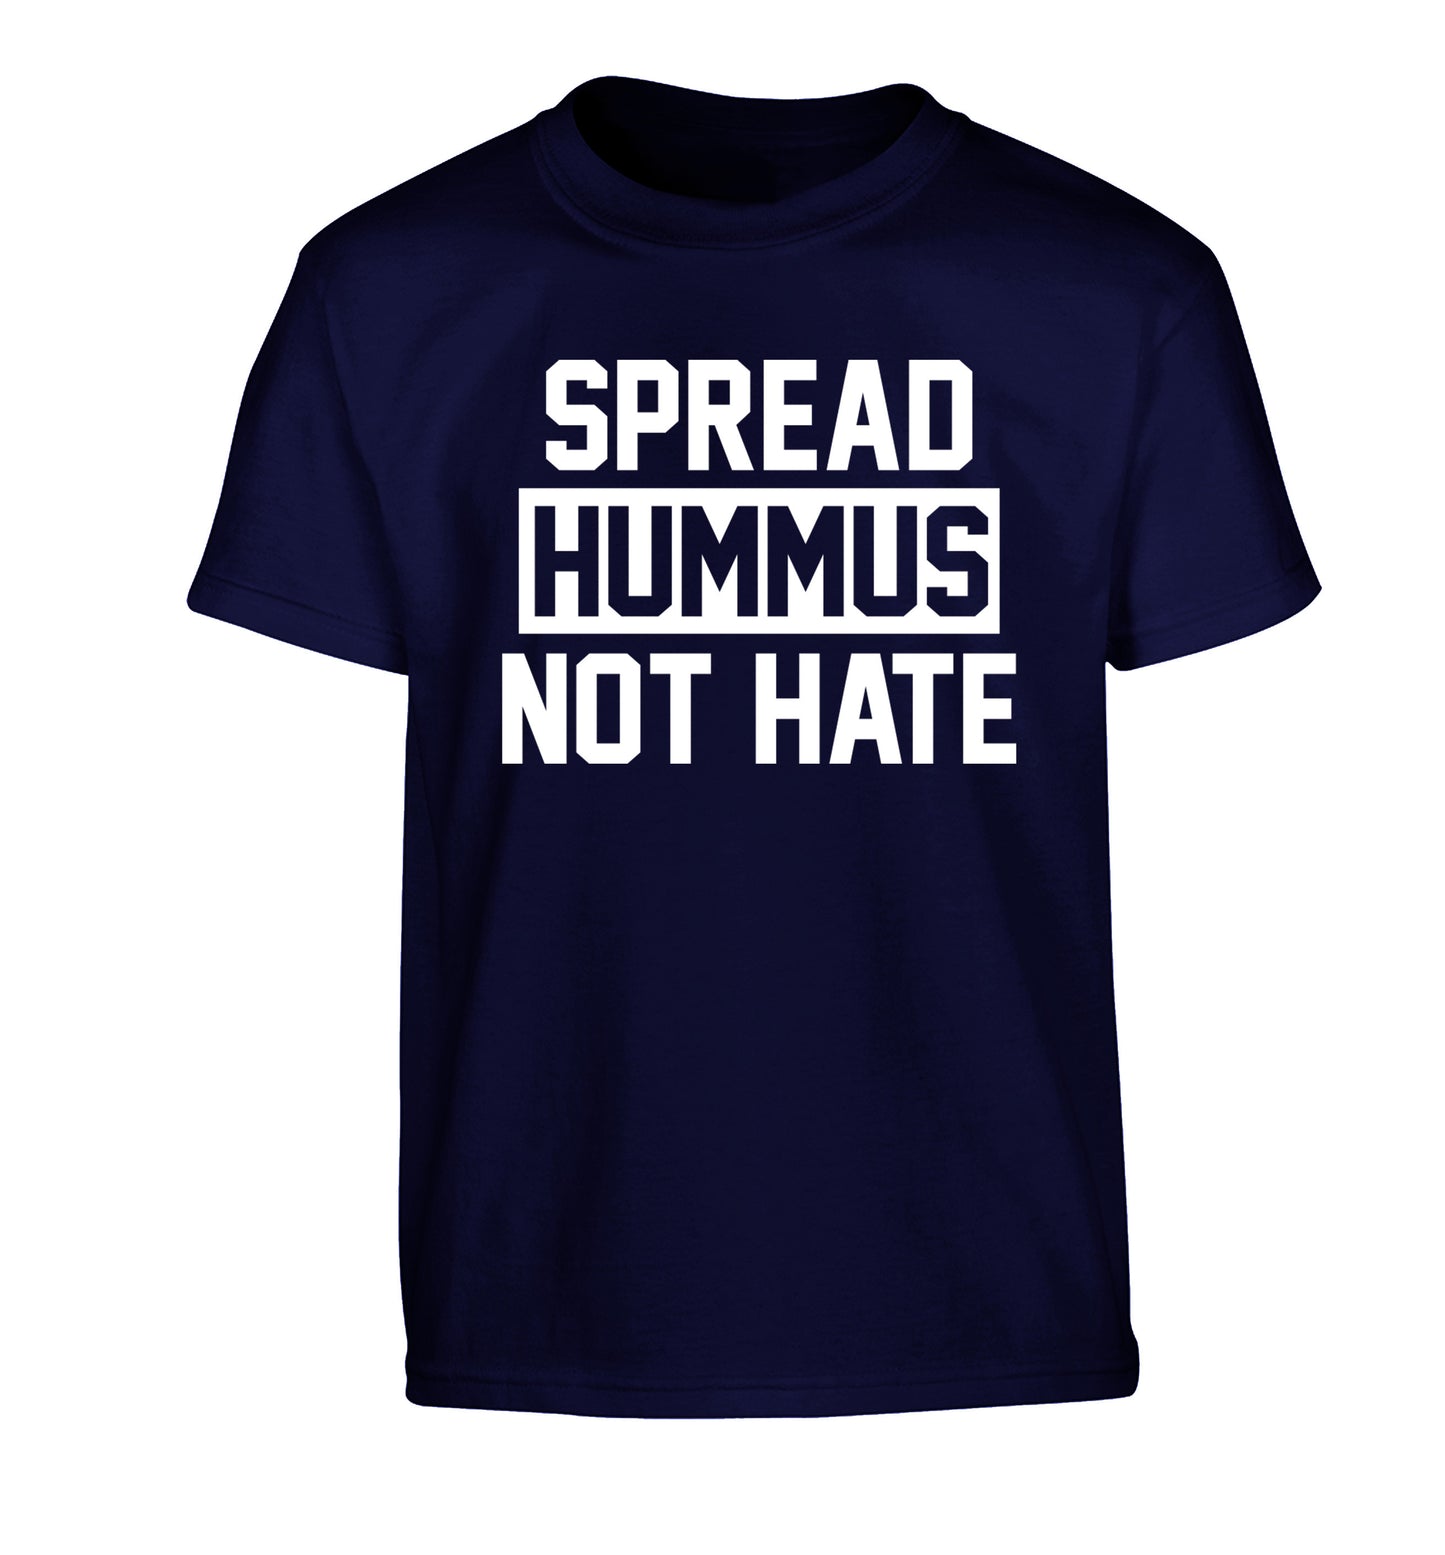 Spread hummus not hate Children's navy Tshirt 12-14 Years